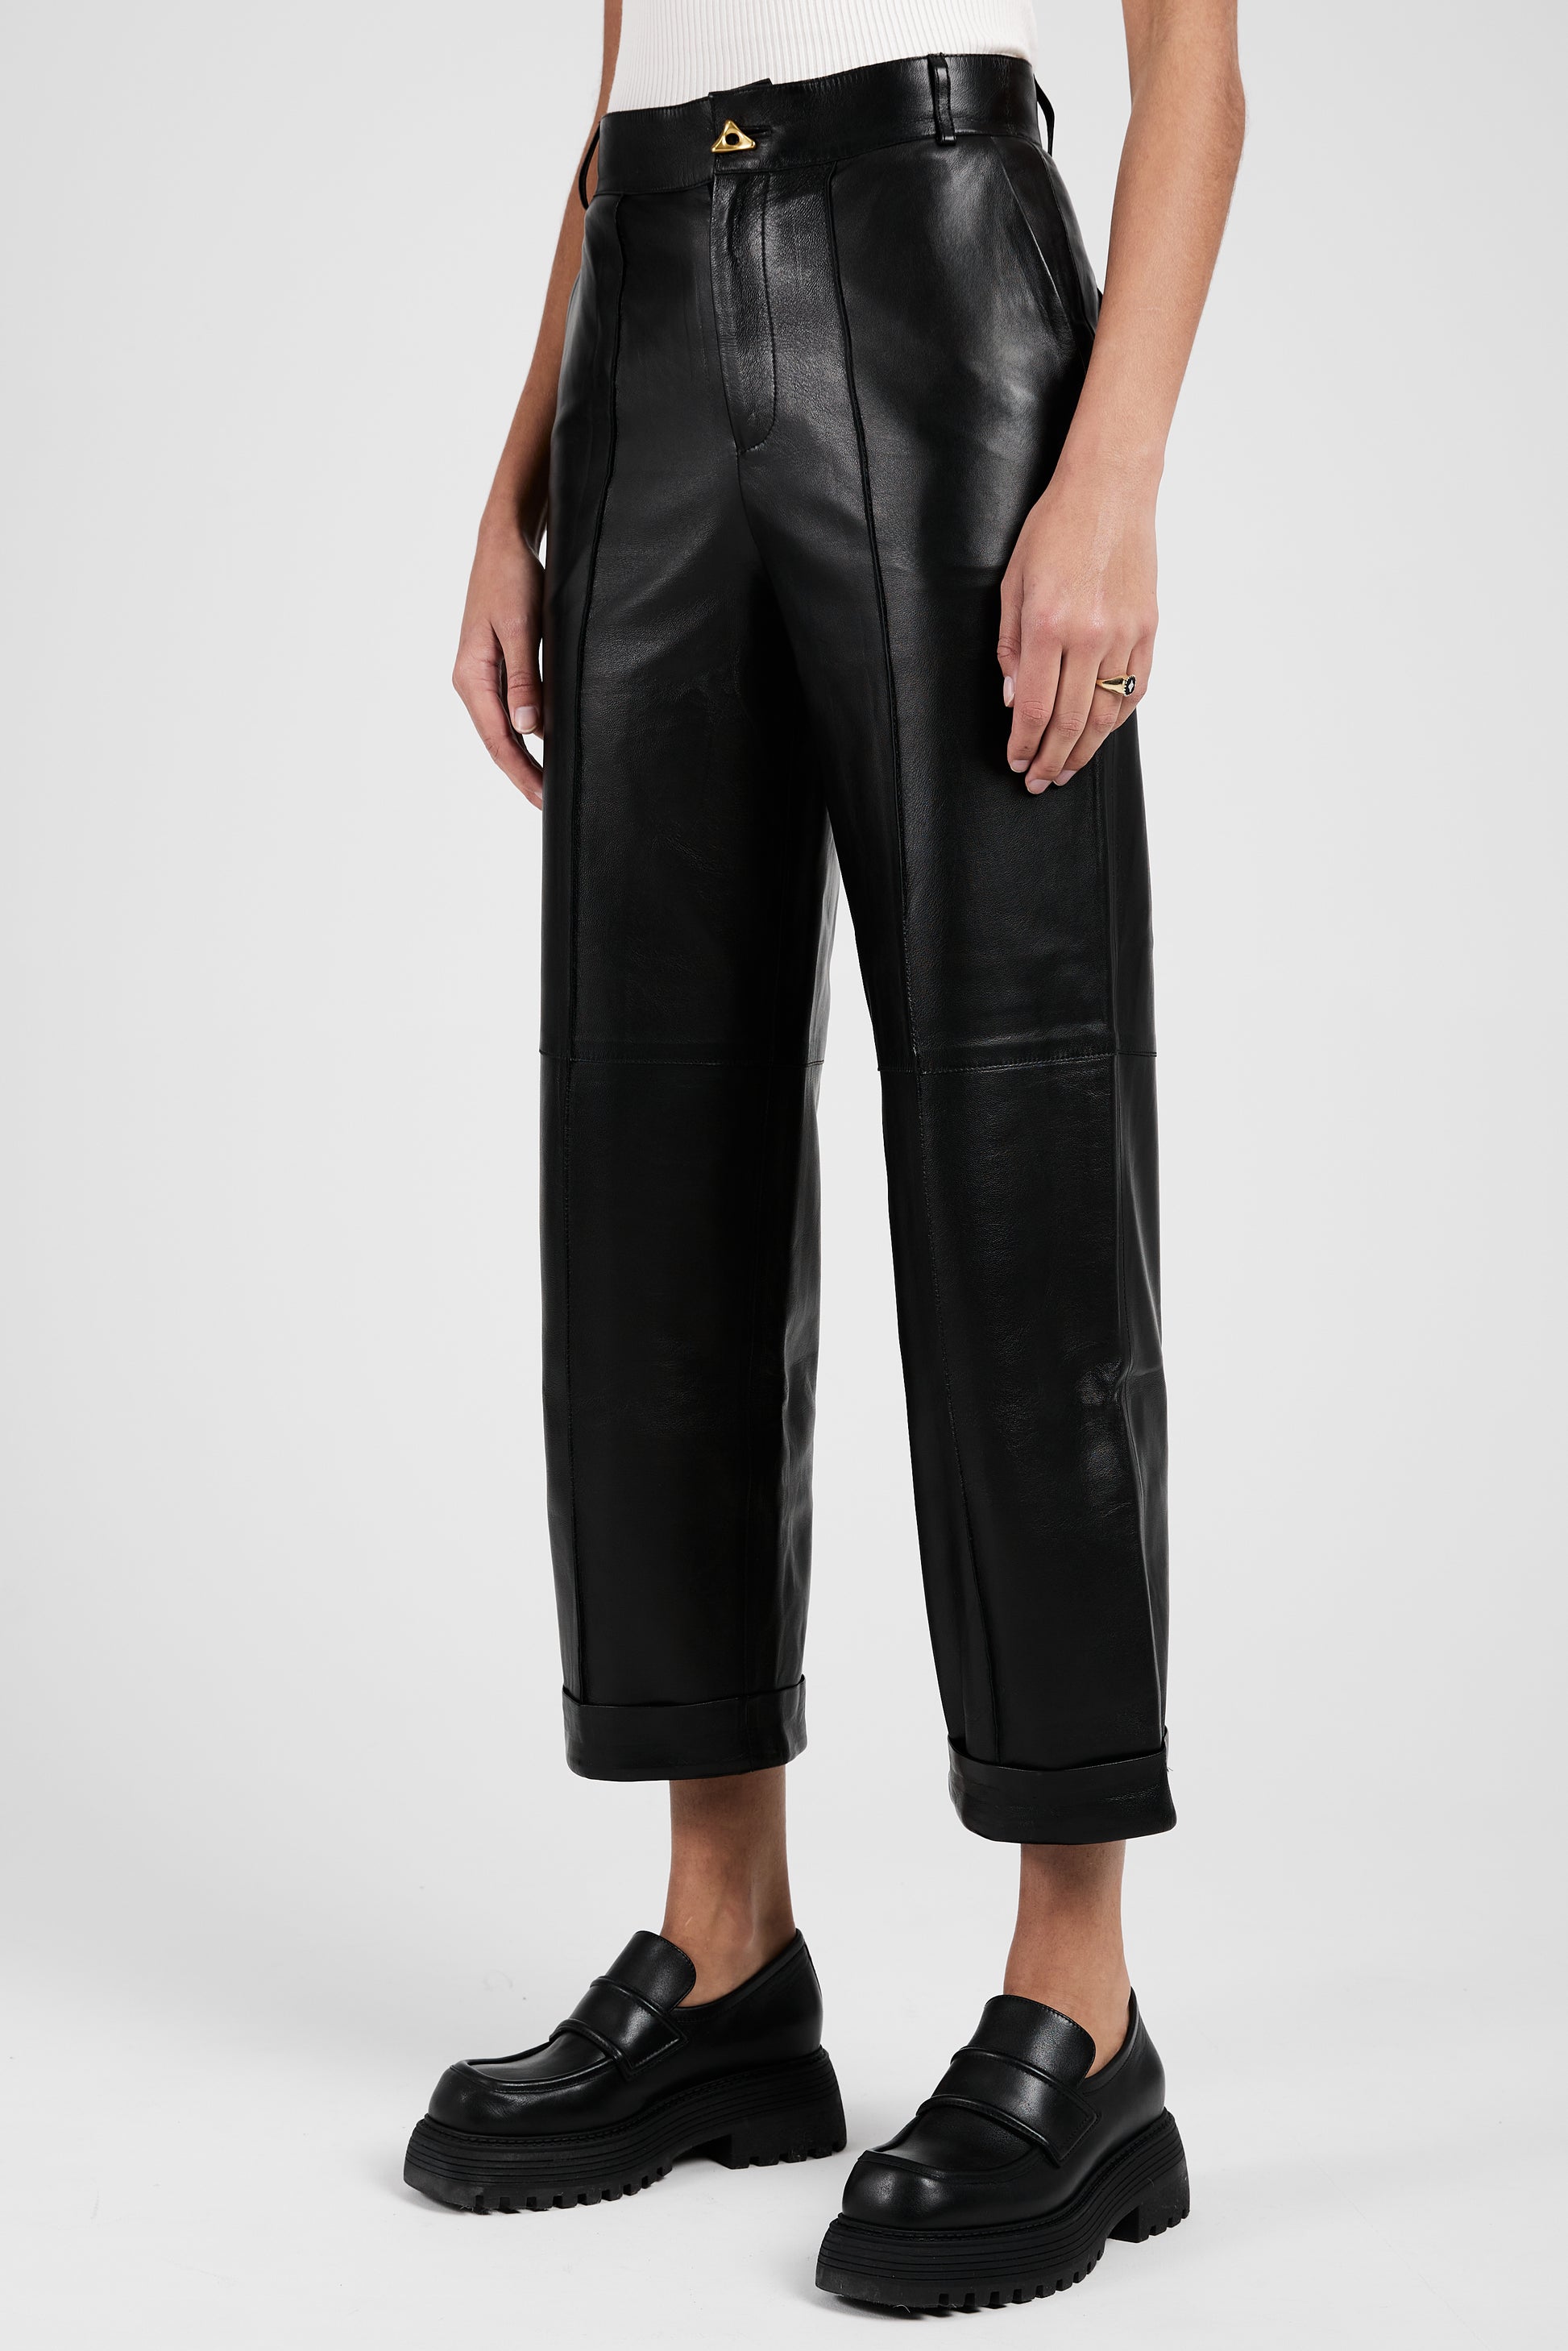 AERON Zima Leather Pant in Black